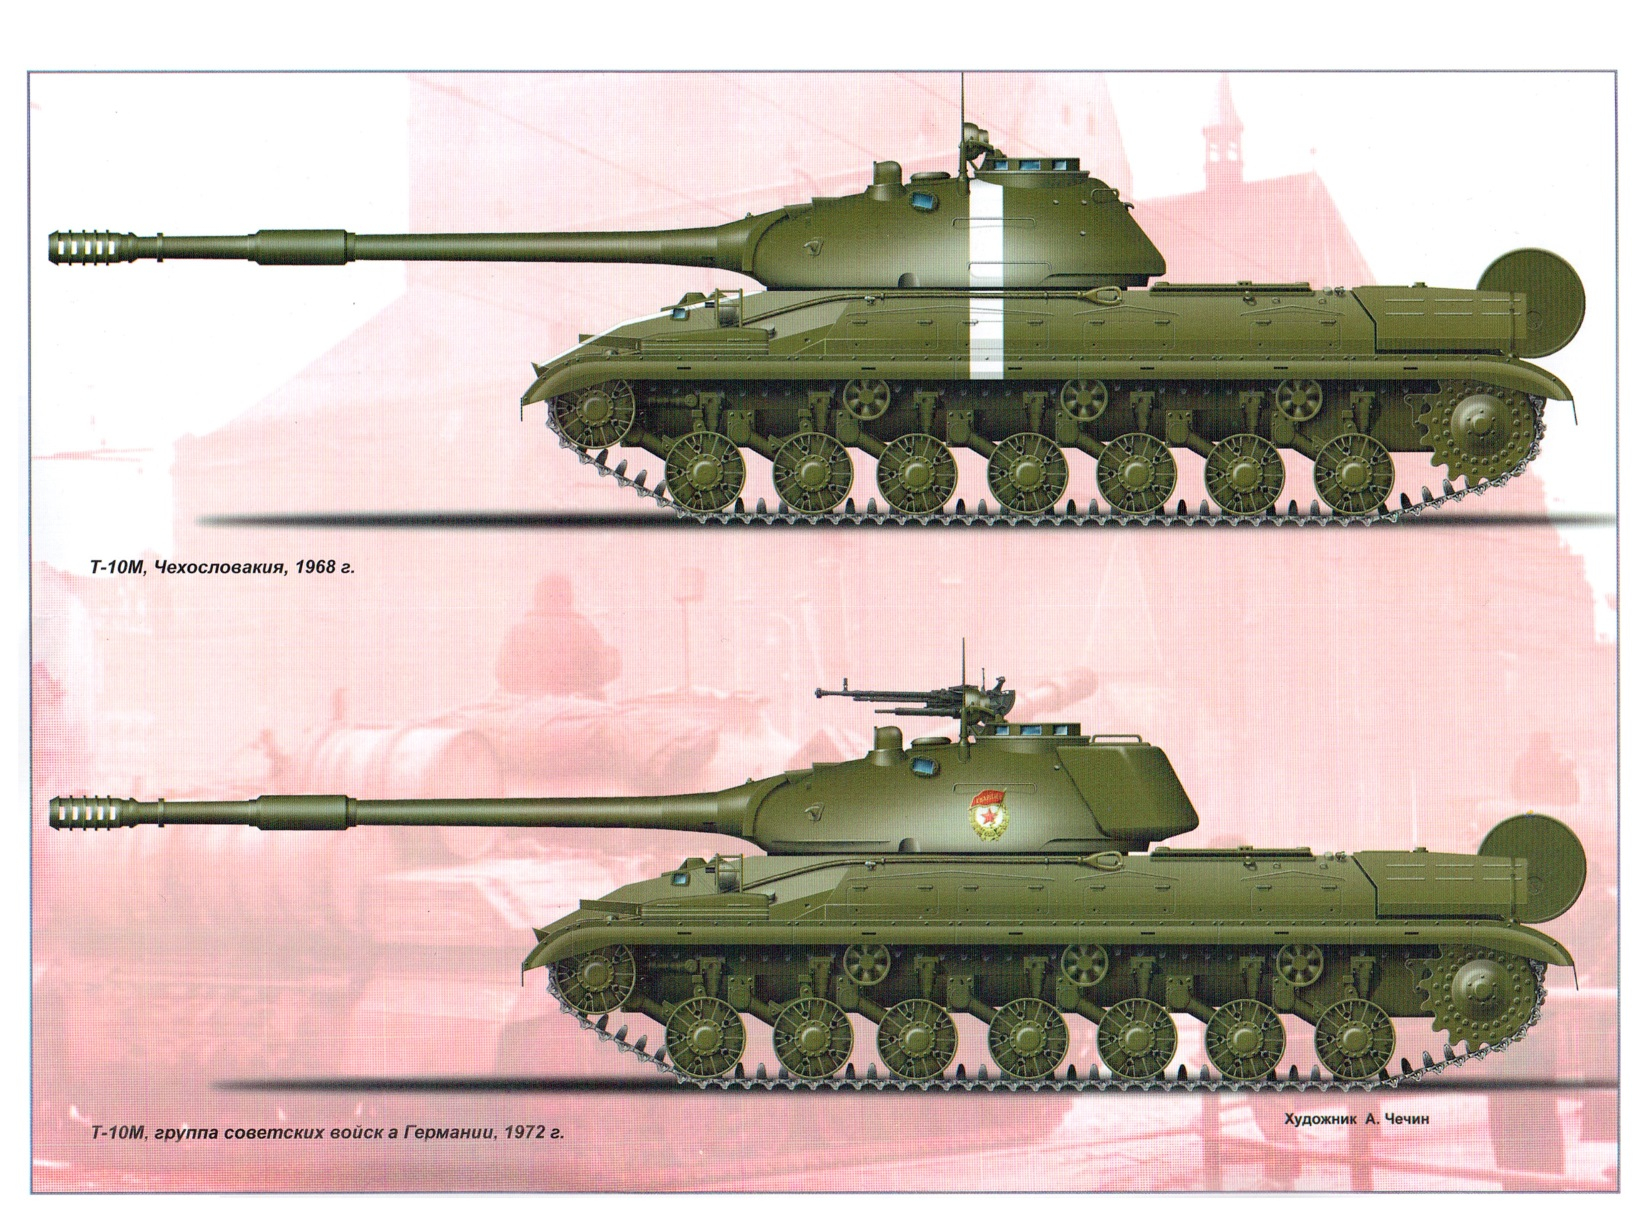 Т3 м. Т-10 танк. Т-10 танк СССР. Советский тяжелый танк т-10 м. Т10/ис8.